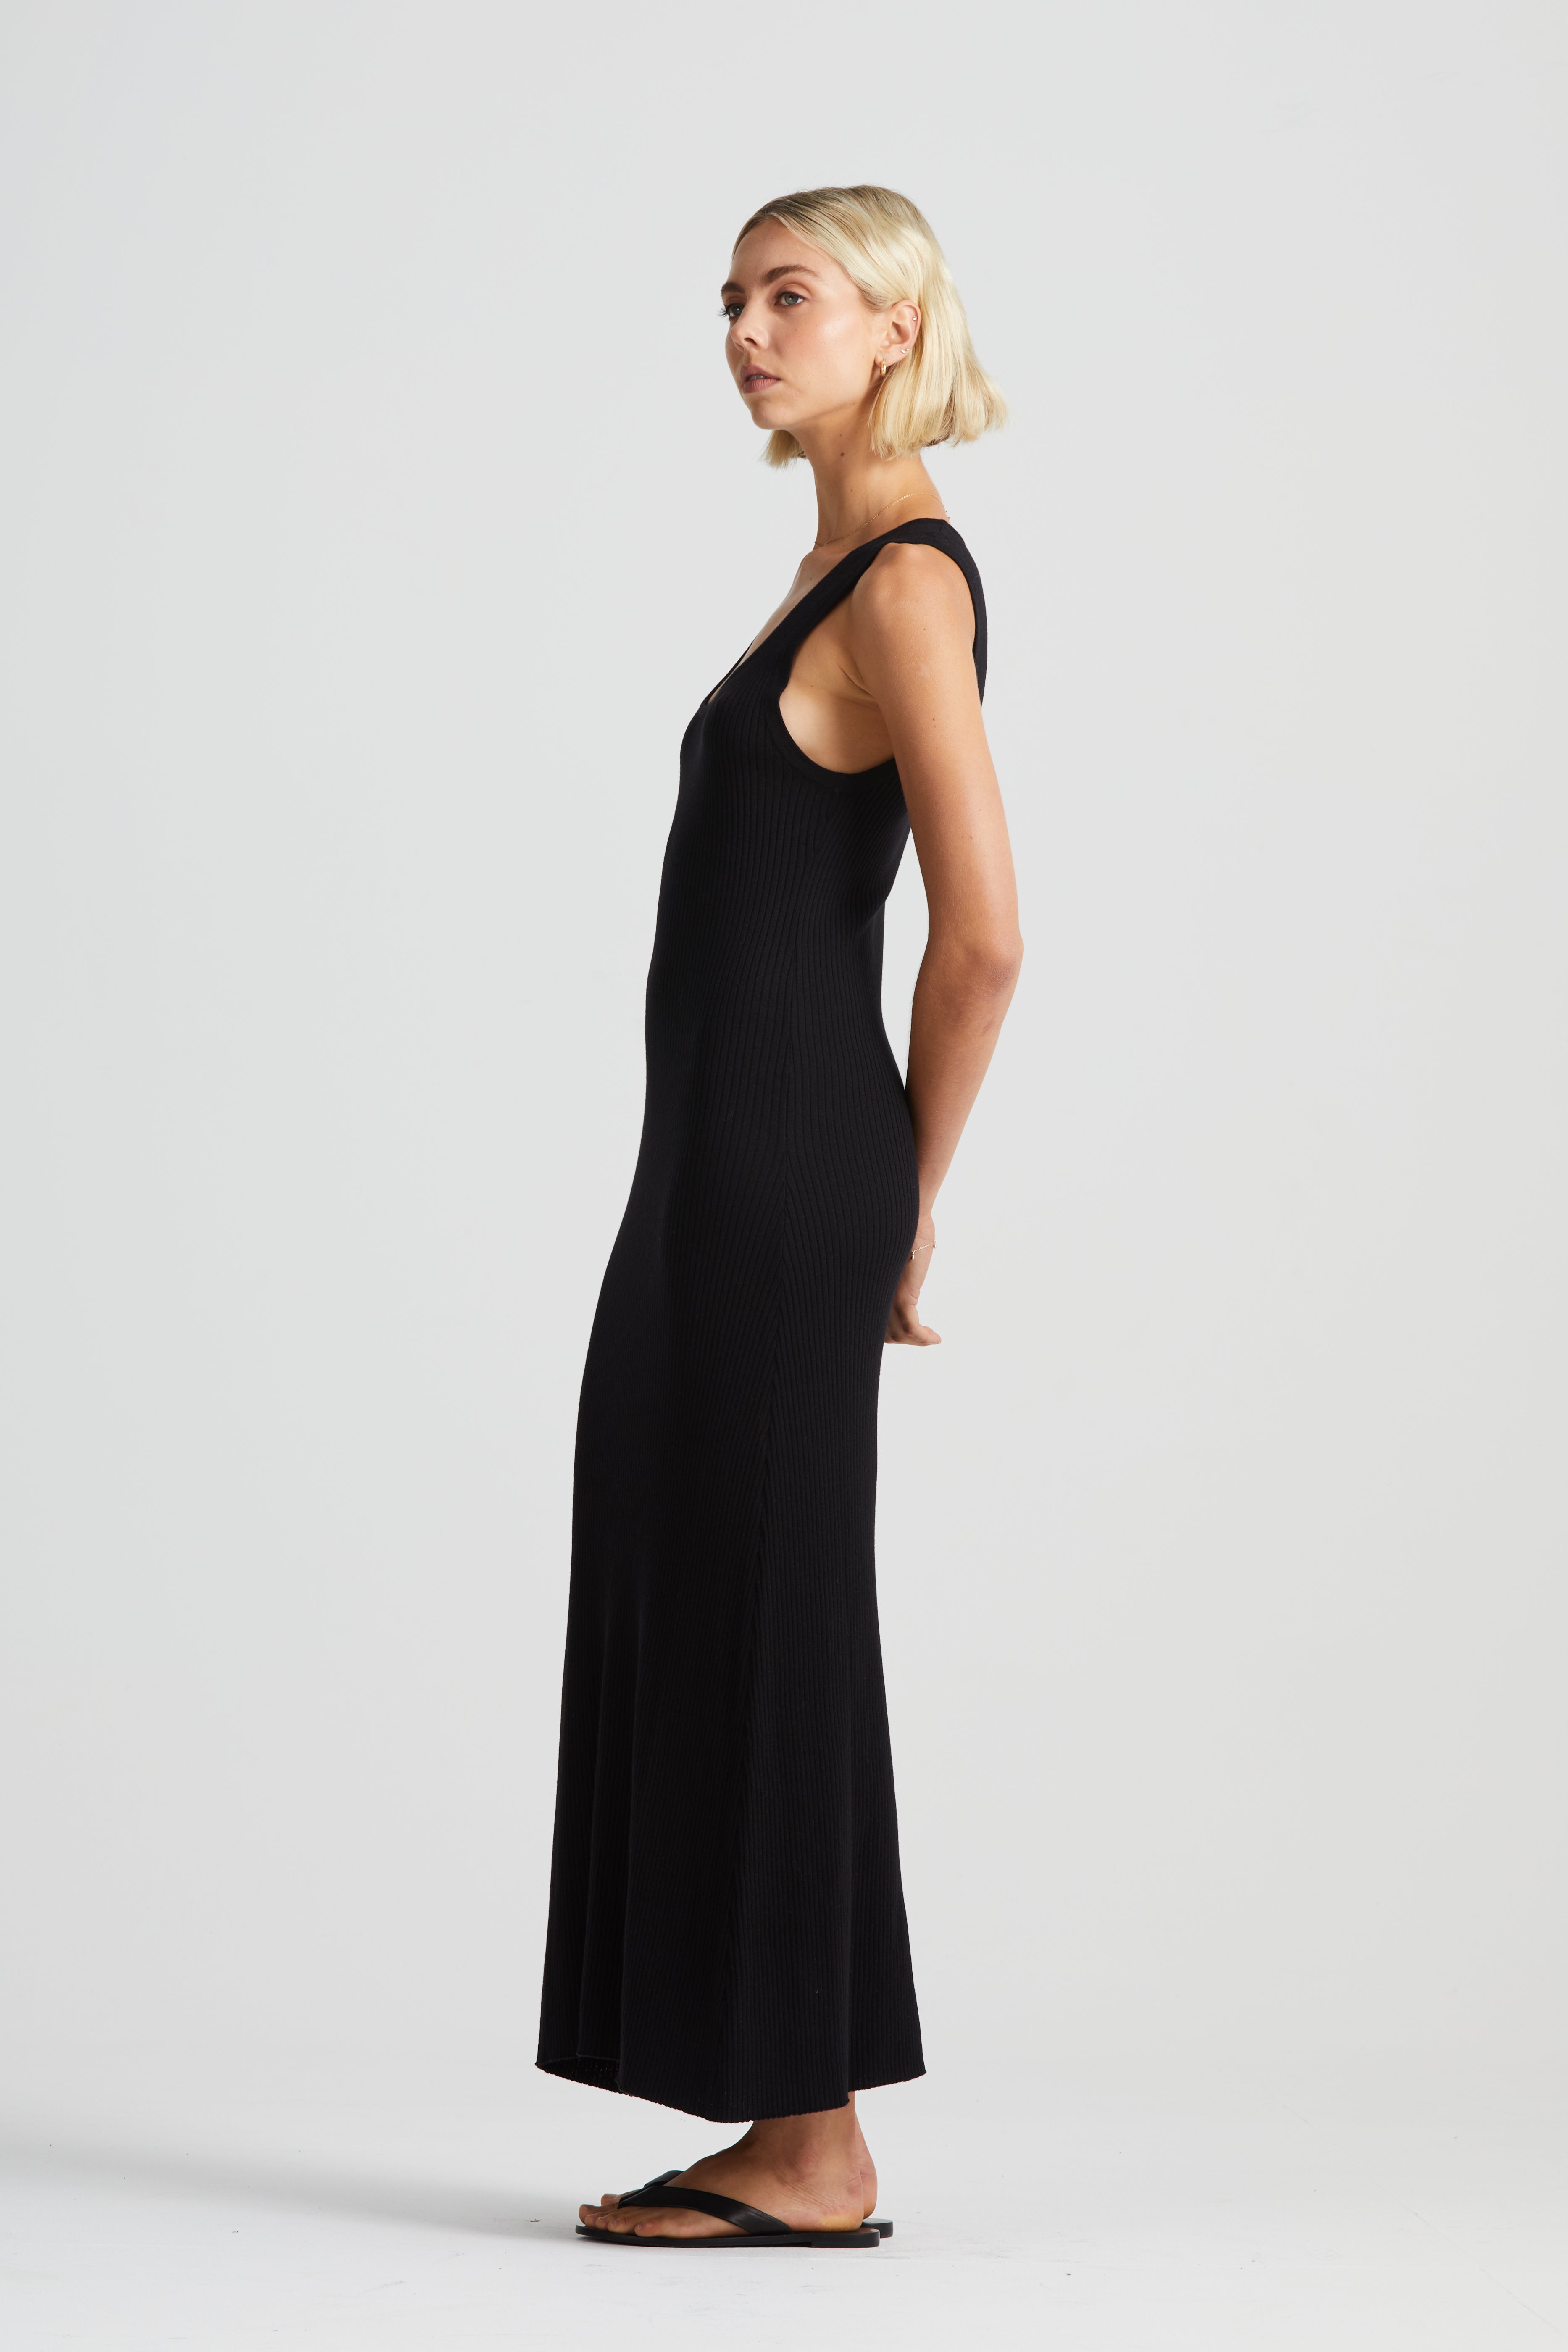 The Linear Sleeveless Knit Dress | 2 Colour-ways $390